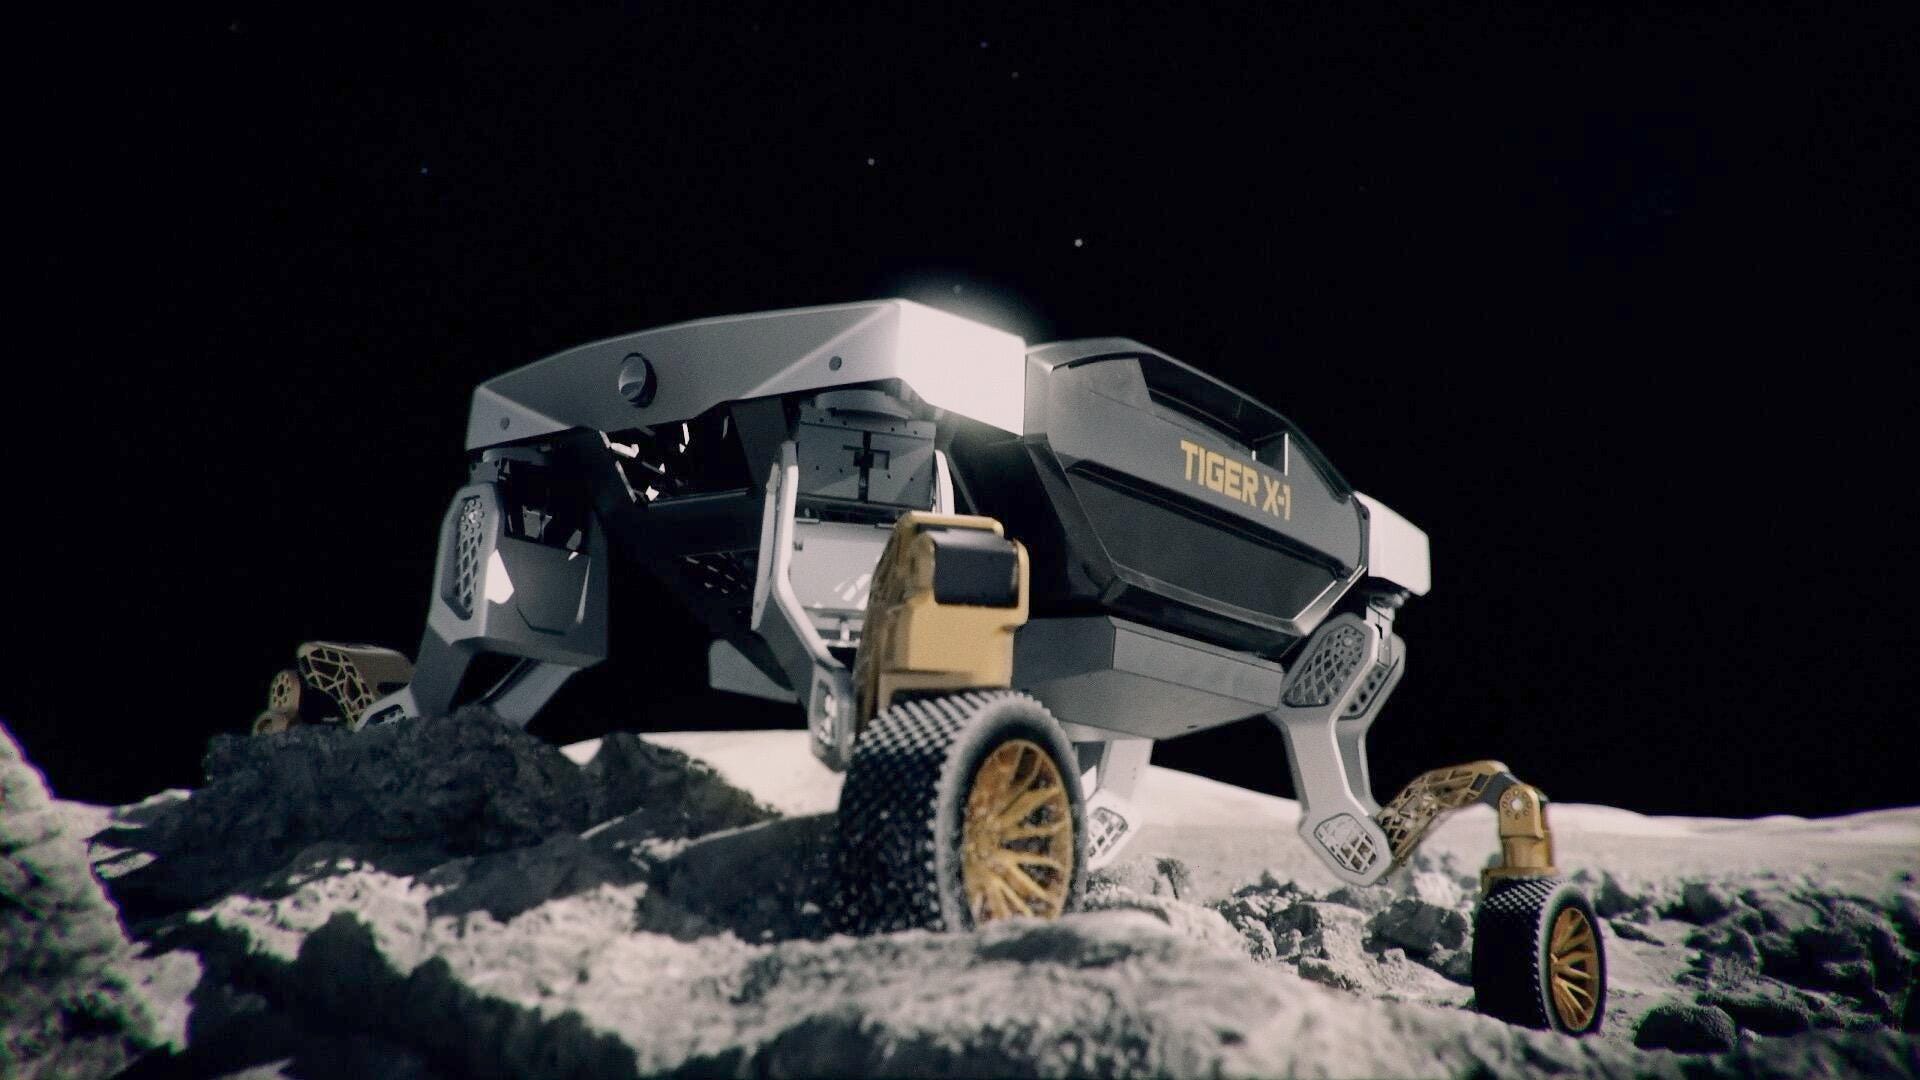 Tiger X-1 robot walking car on the moon